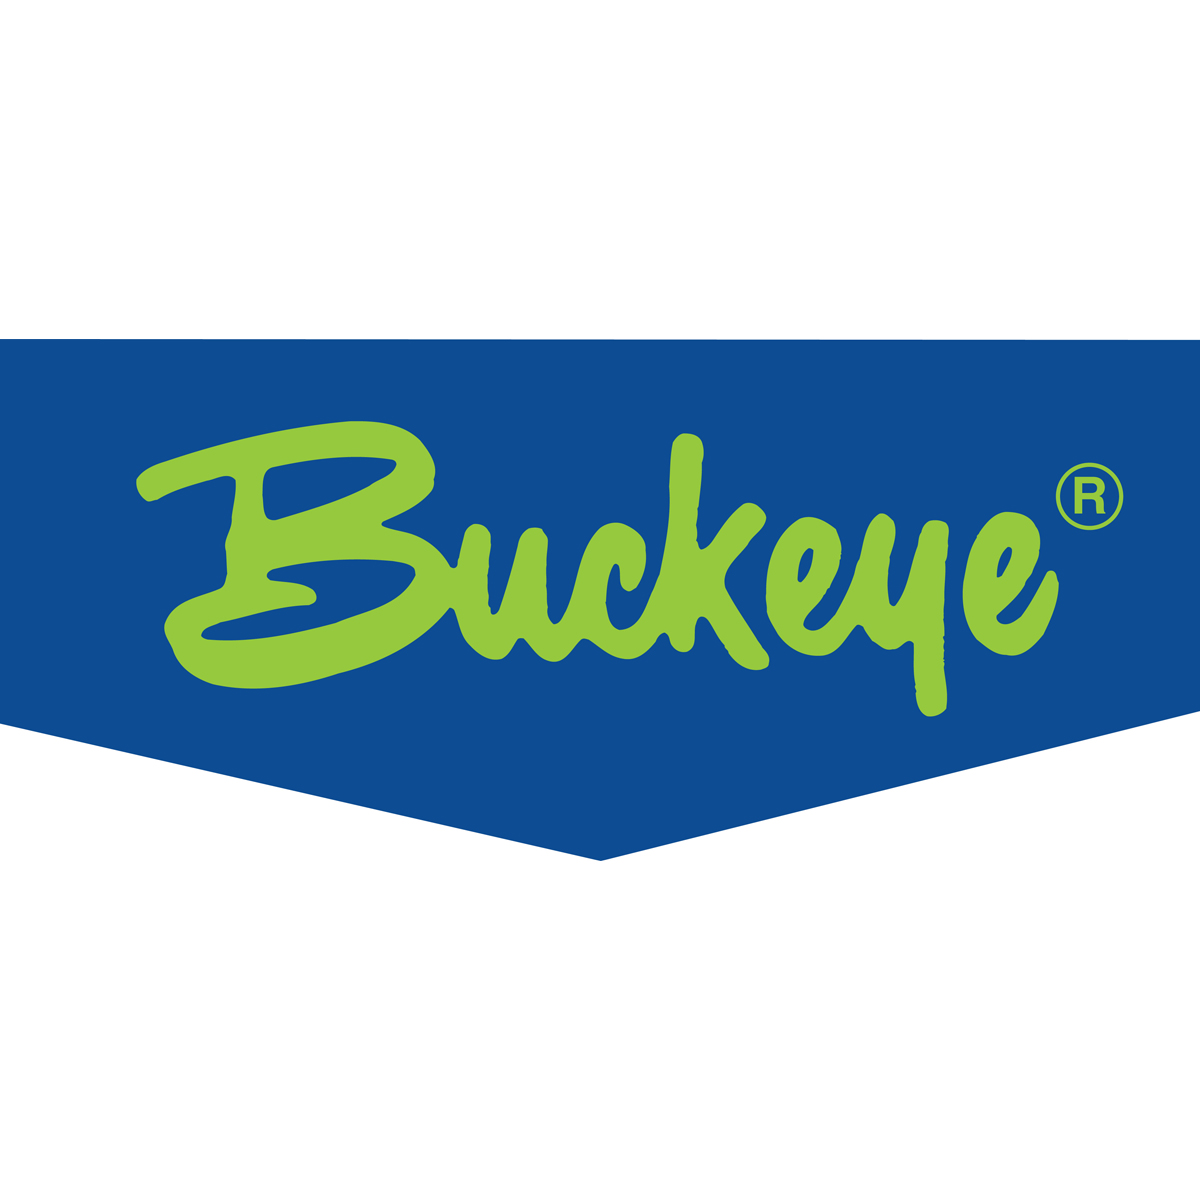 Buckeye Products